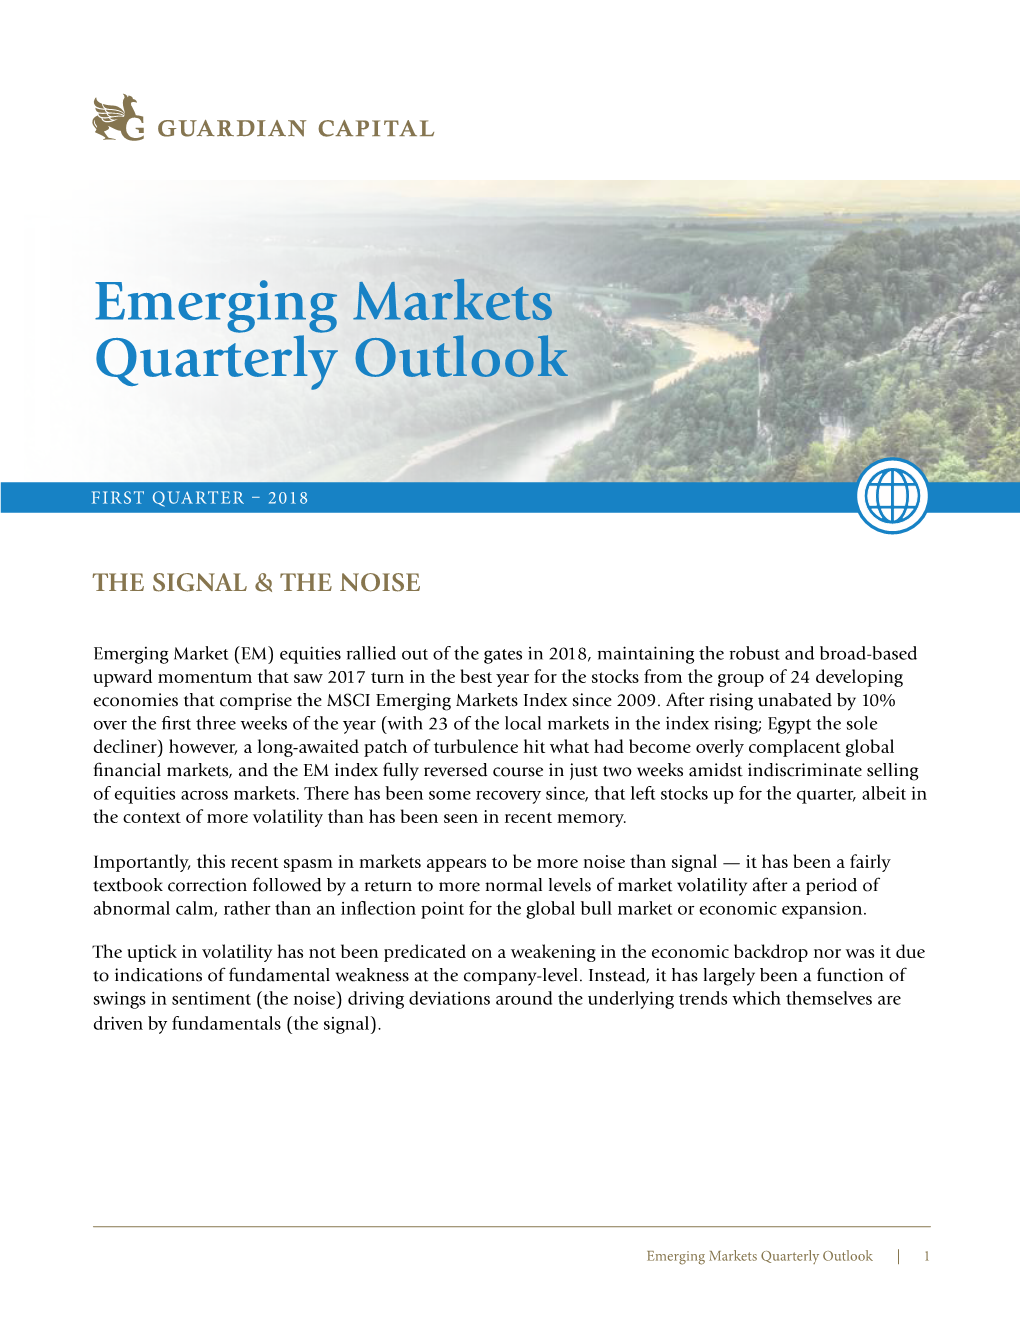 Emerging Markets Quarterly Outlook